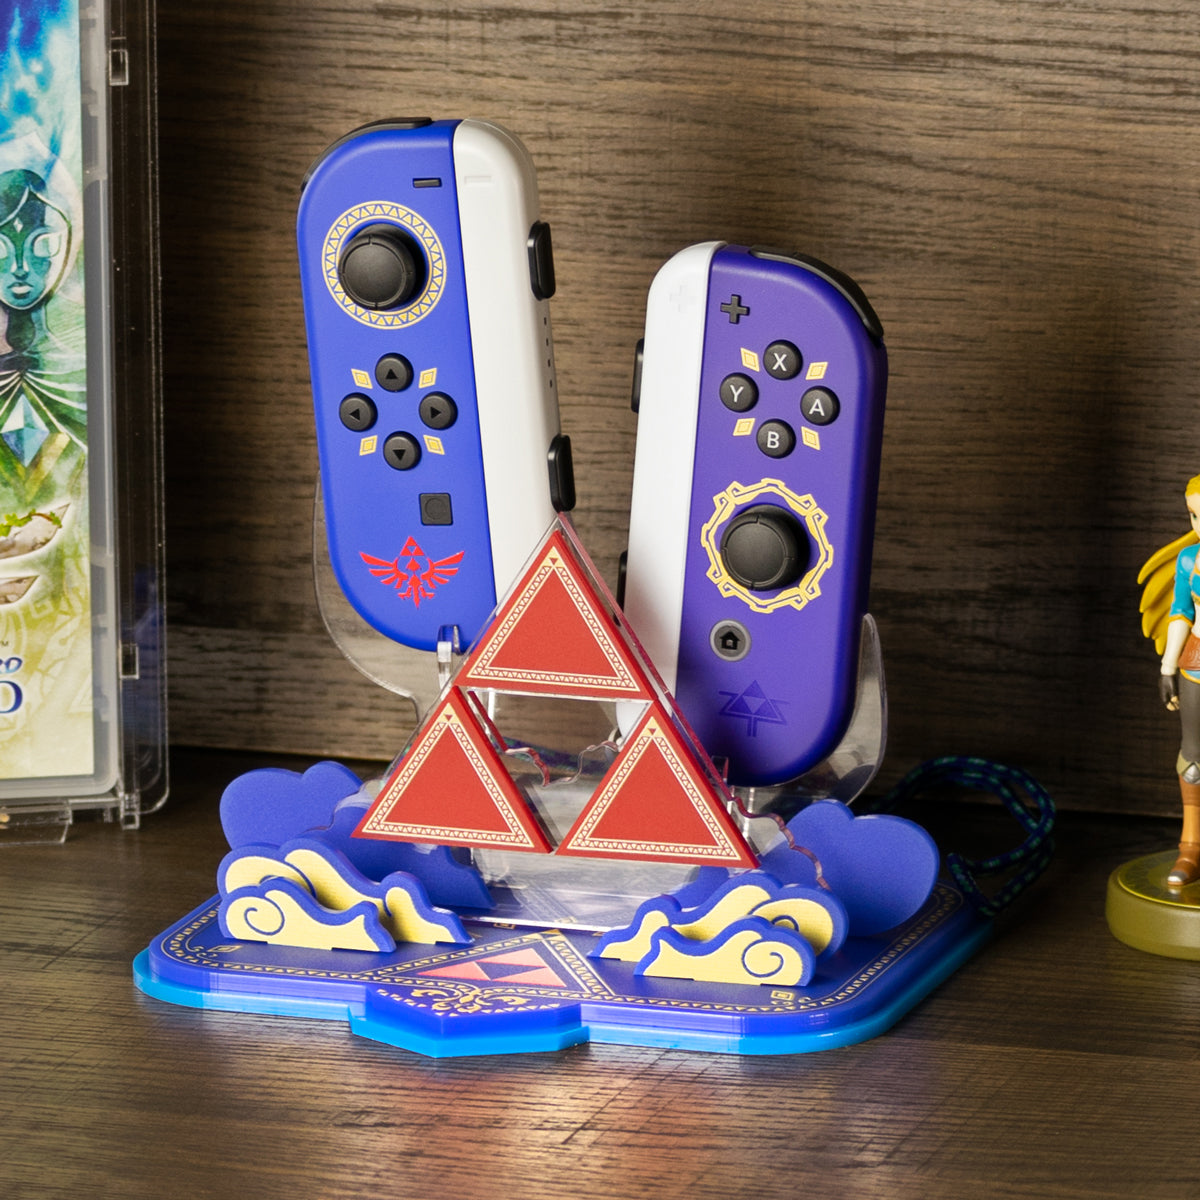 Where To Buy The Limited Edition Zelda: Skyward Sword Joy-Con